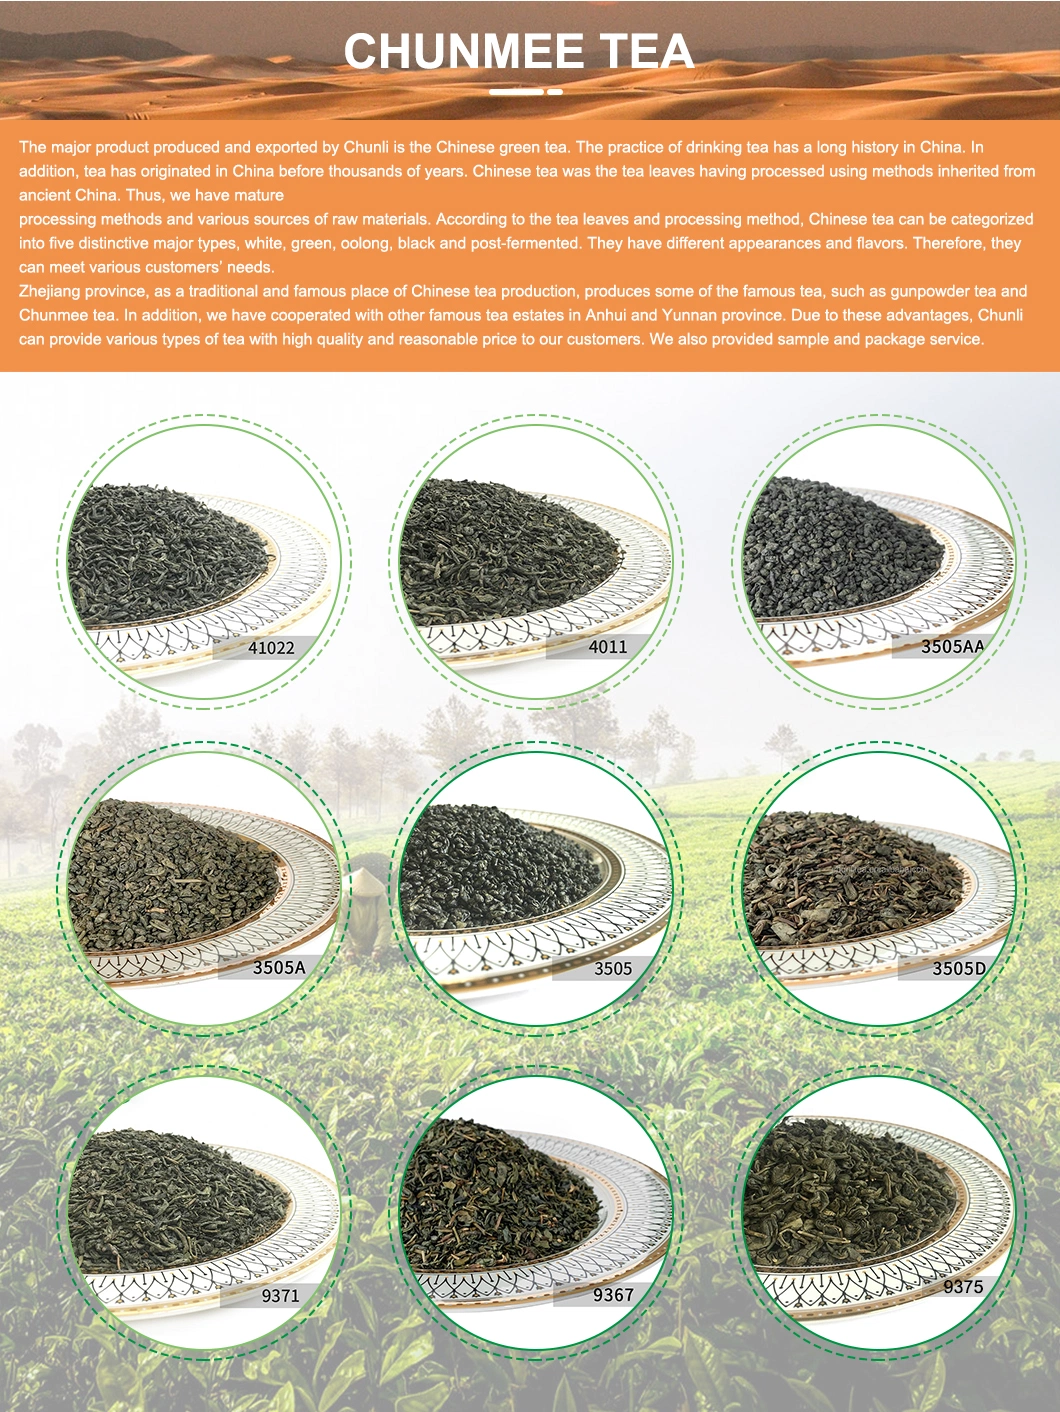 The Tea New Chinese National Green Tea Gunpowder 9775 Bags Packaging